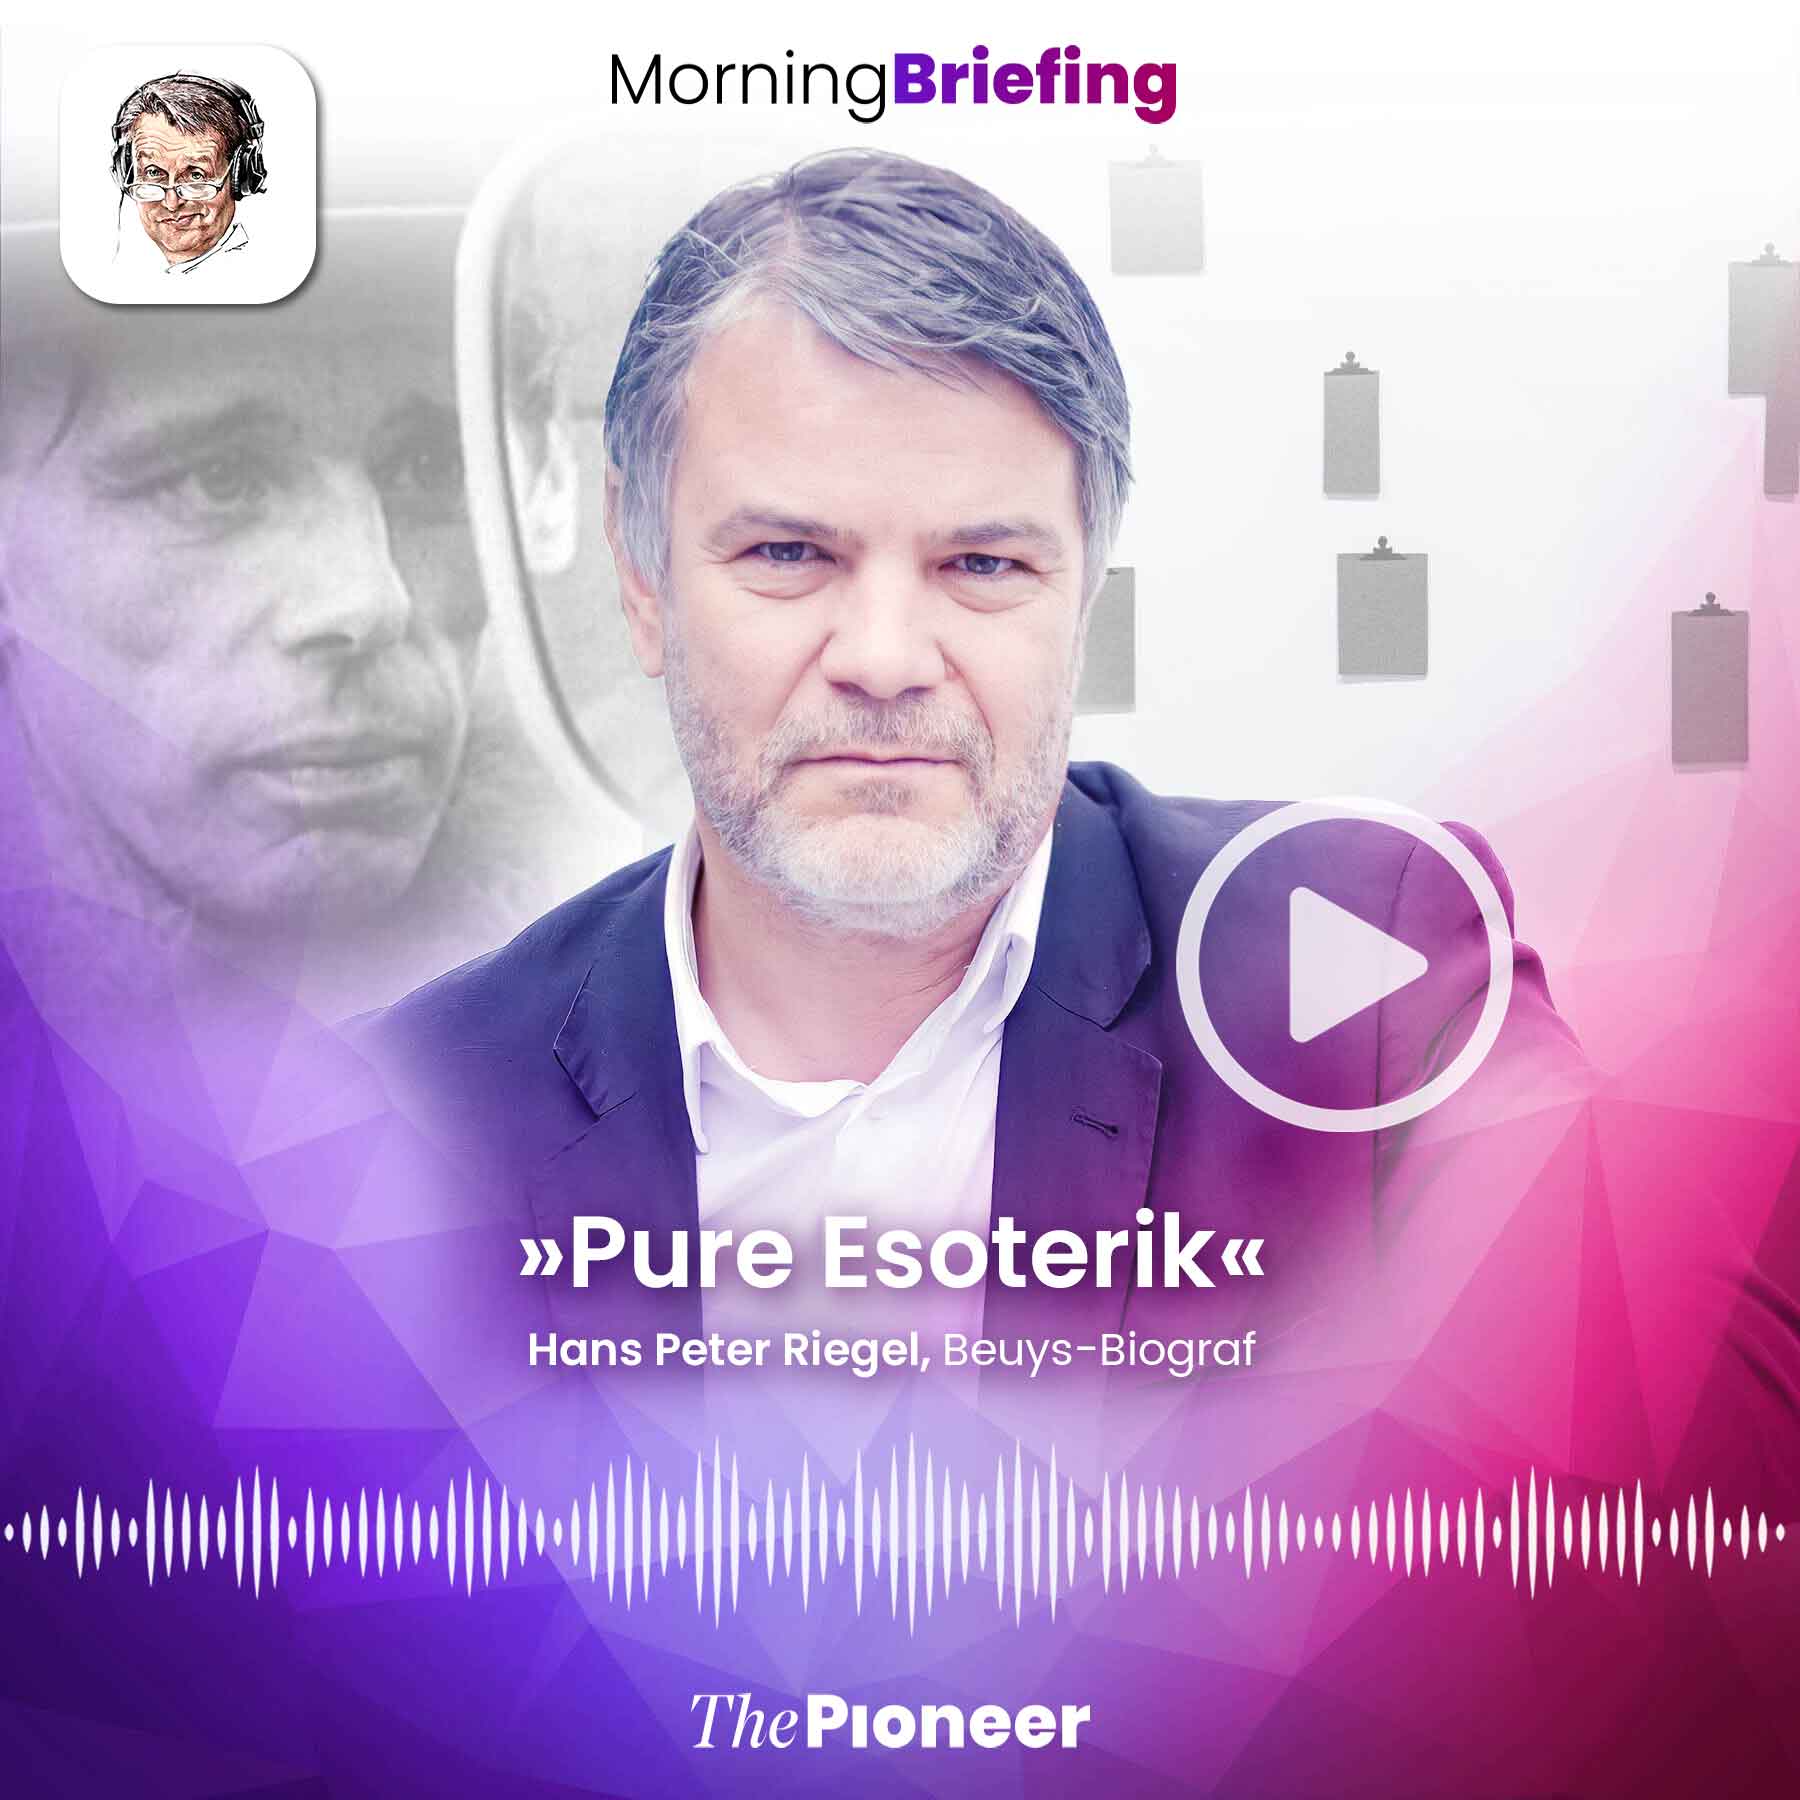 20210512-podcast-morning-briefing-media-pioneer-hans-peter-riegel copy (1)